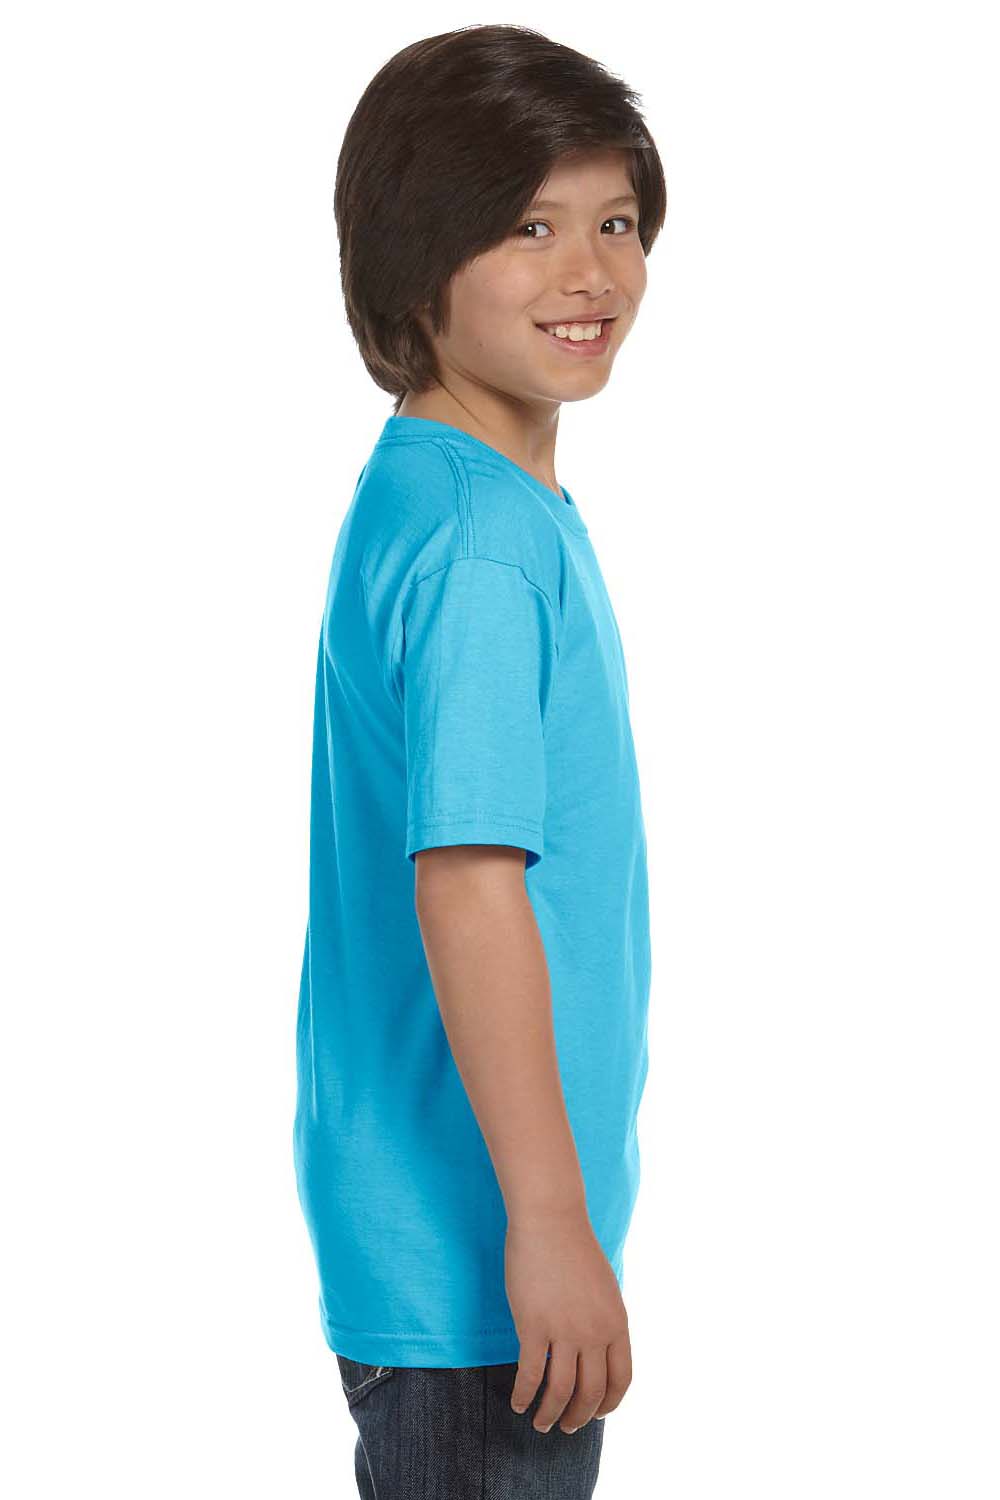 Hanes 5480 Youth ComfortSoft Short Sleeve Crewneck T-Shirt Light Blue Side